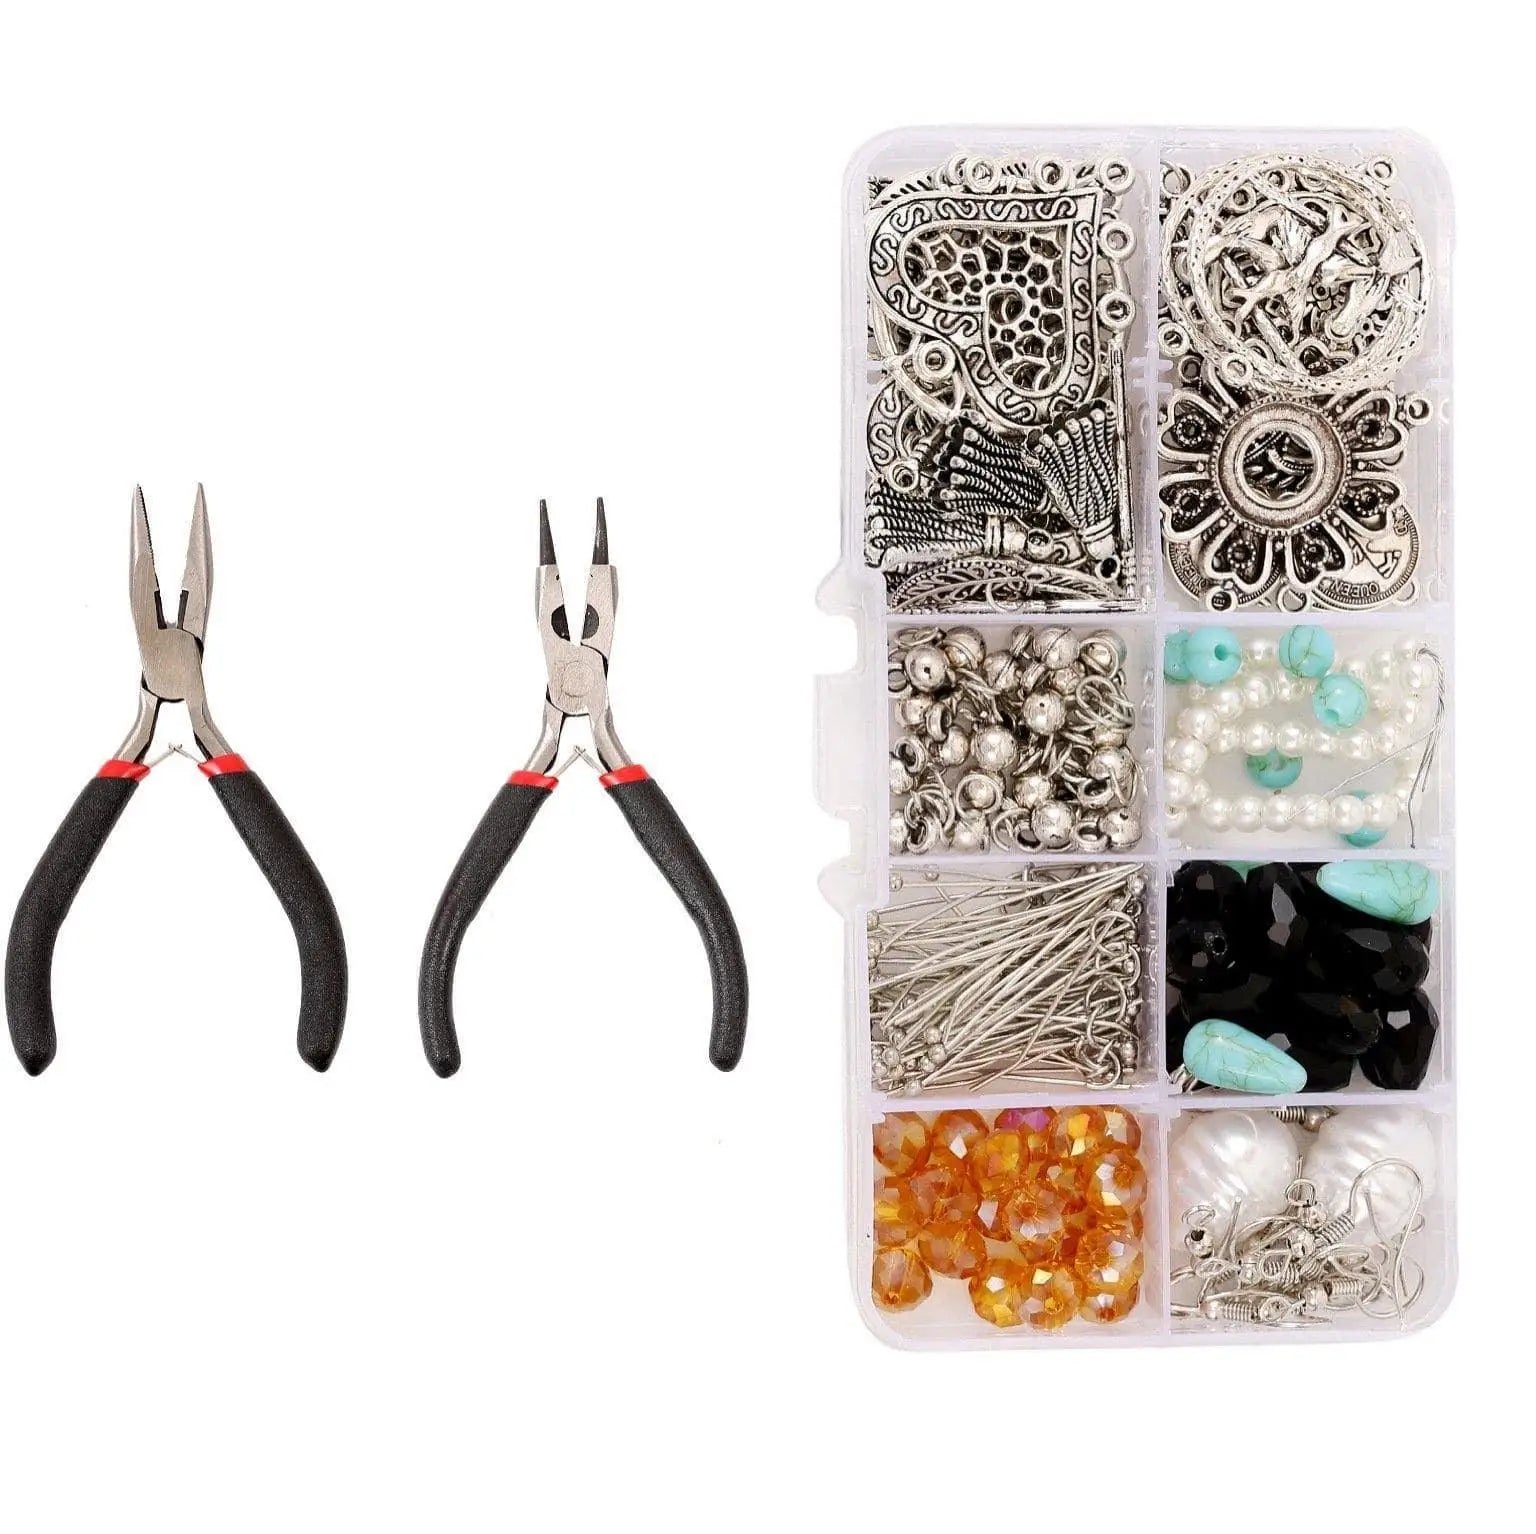 LOVEMI - Crystal Accessories Material Christmas Earrings